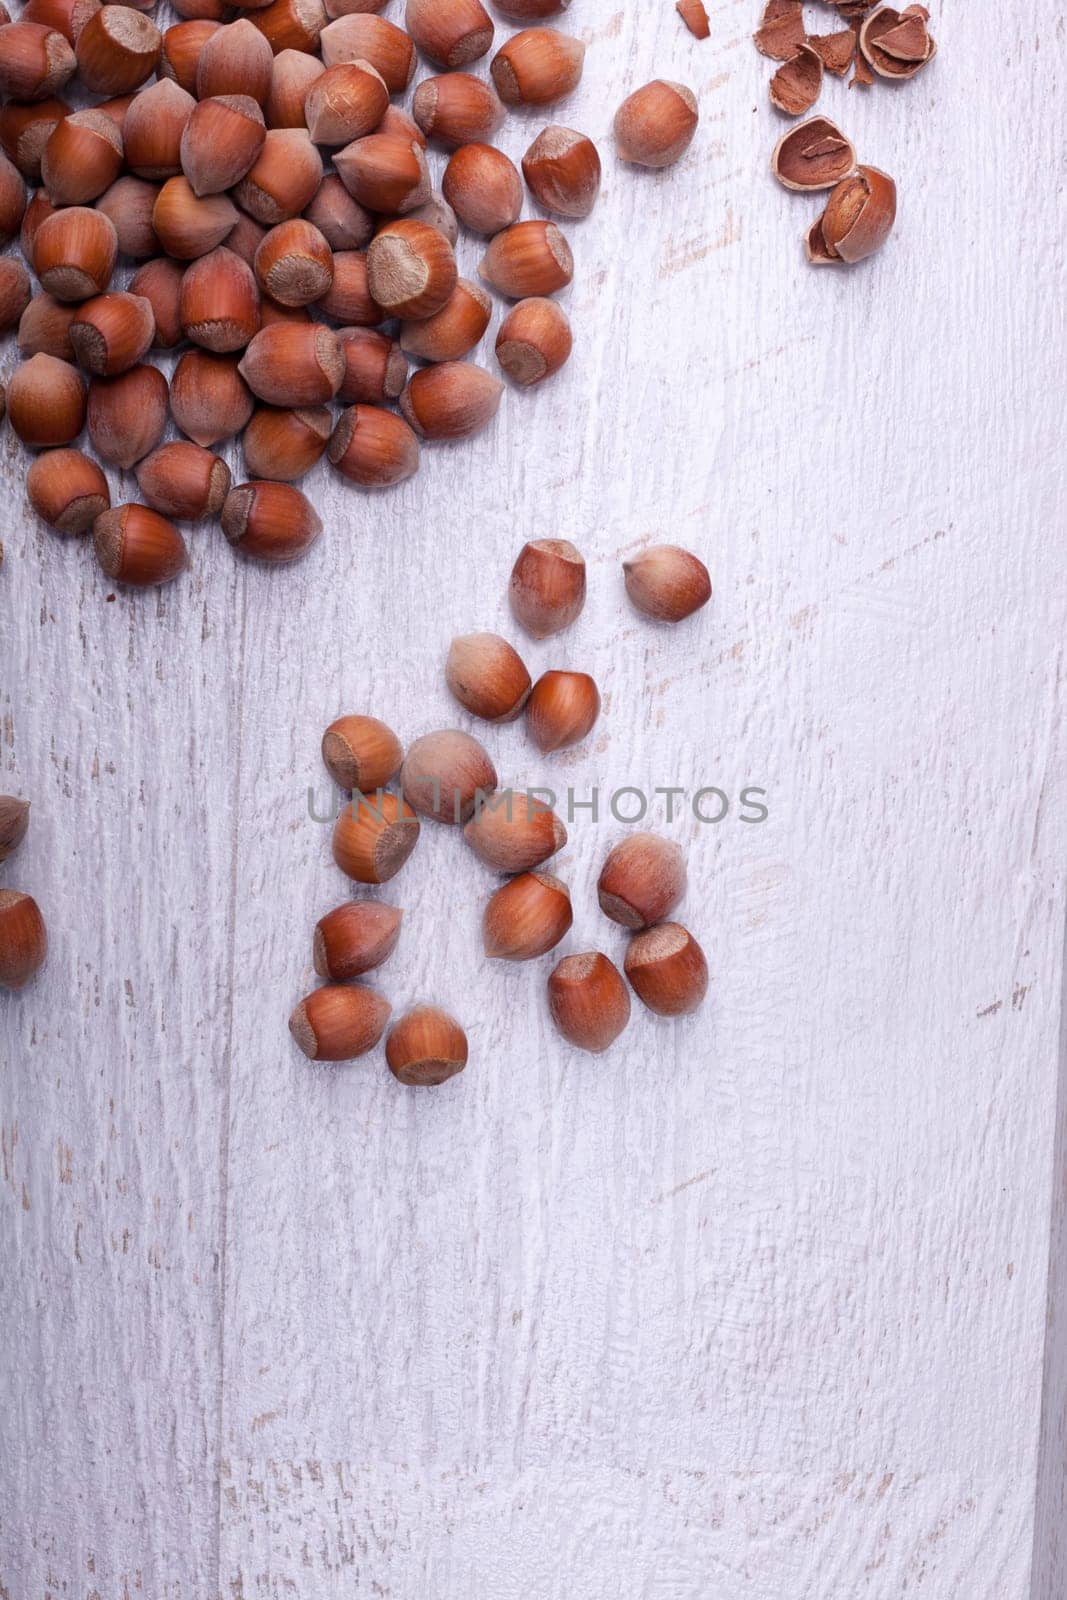 Hazelnuts on wooden background by DCStudio